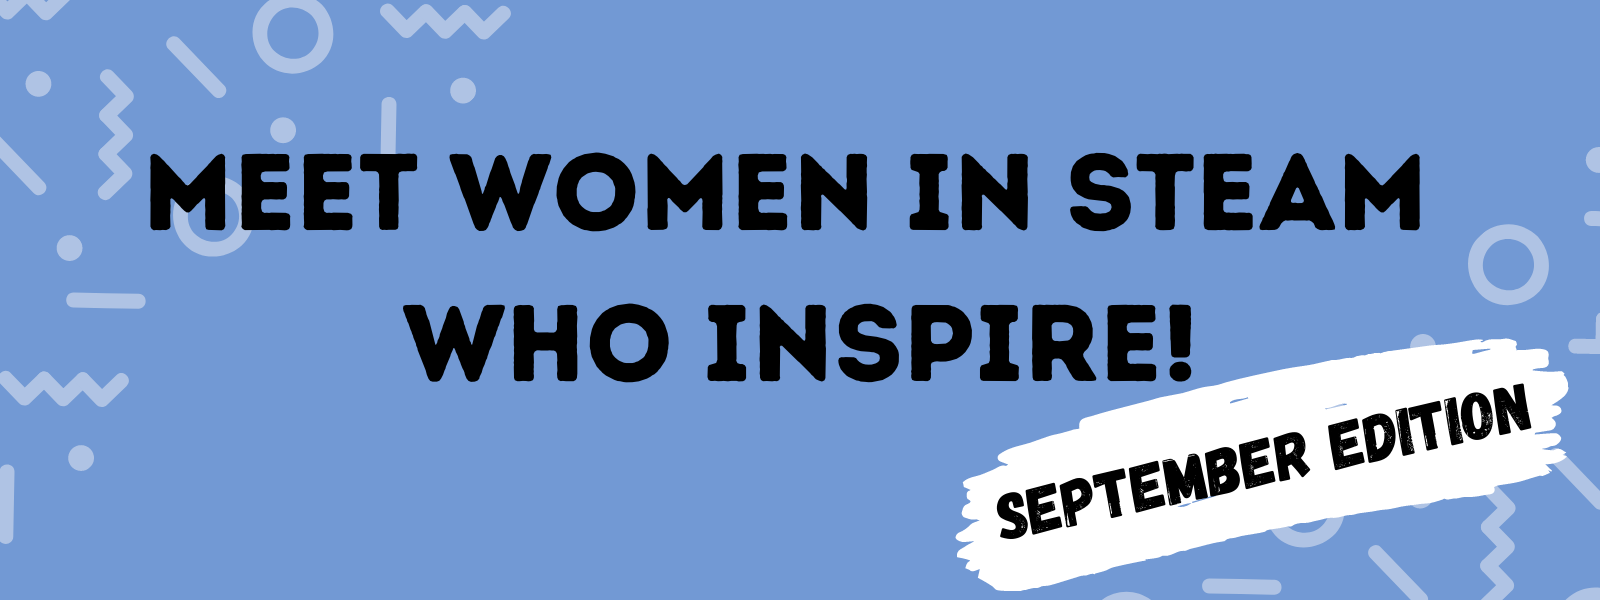 Meet women in steam who inspire - september 2021 edition